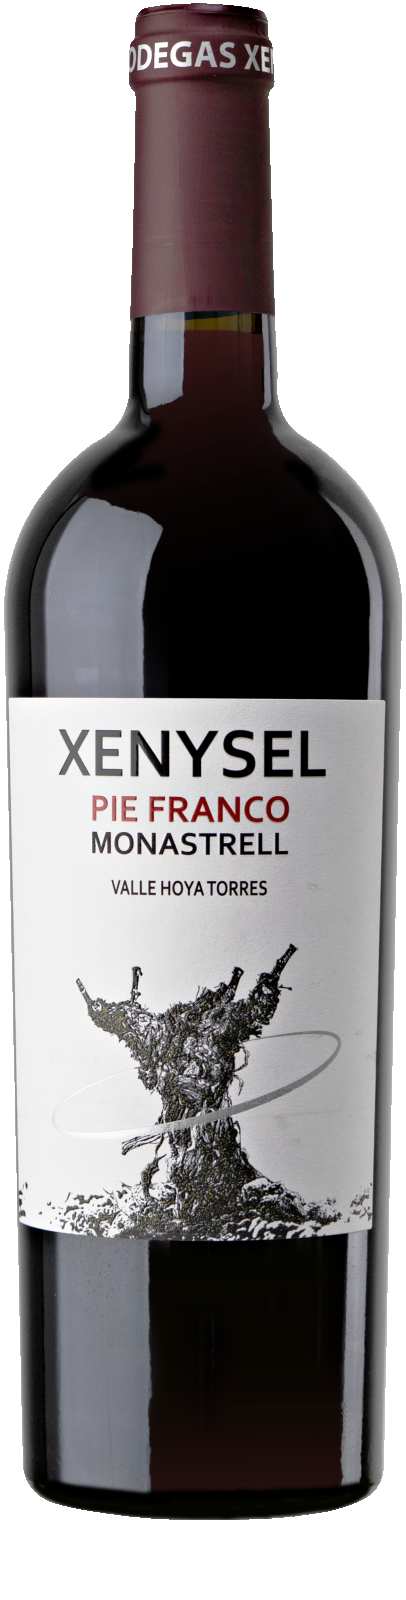 Productfoto Xenysel 'Pie Franco' Monastrell